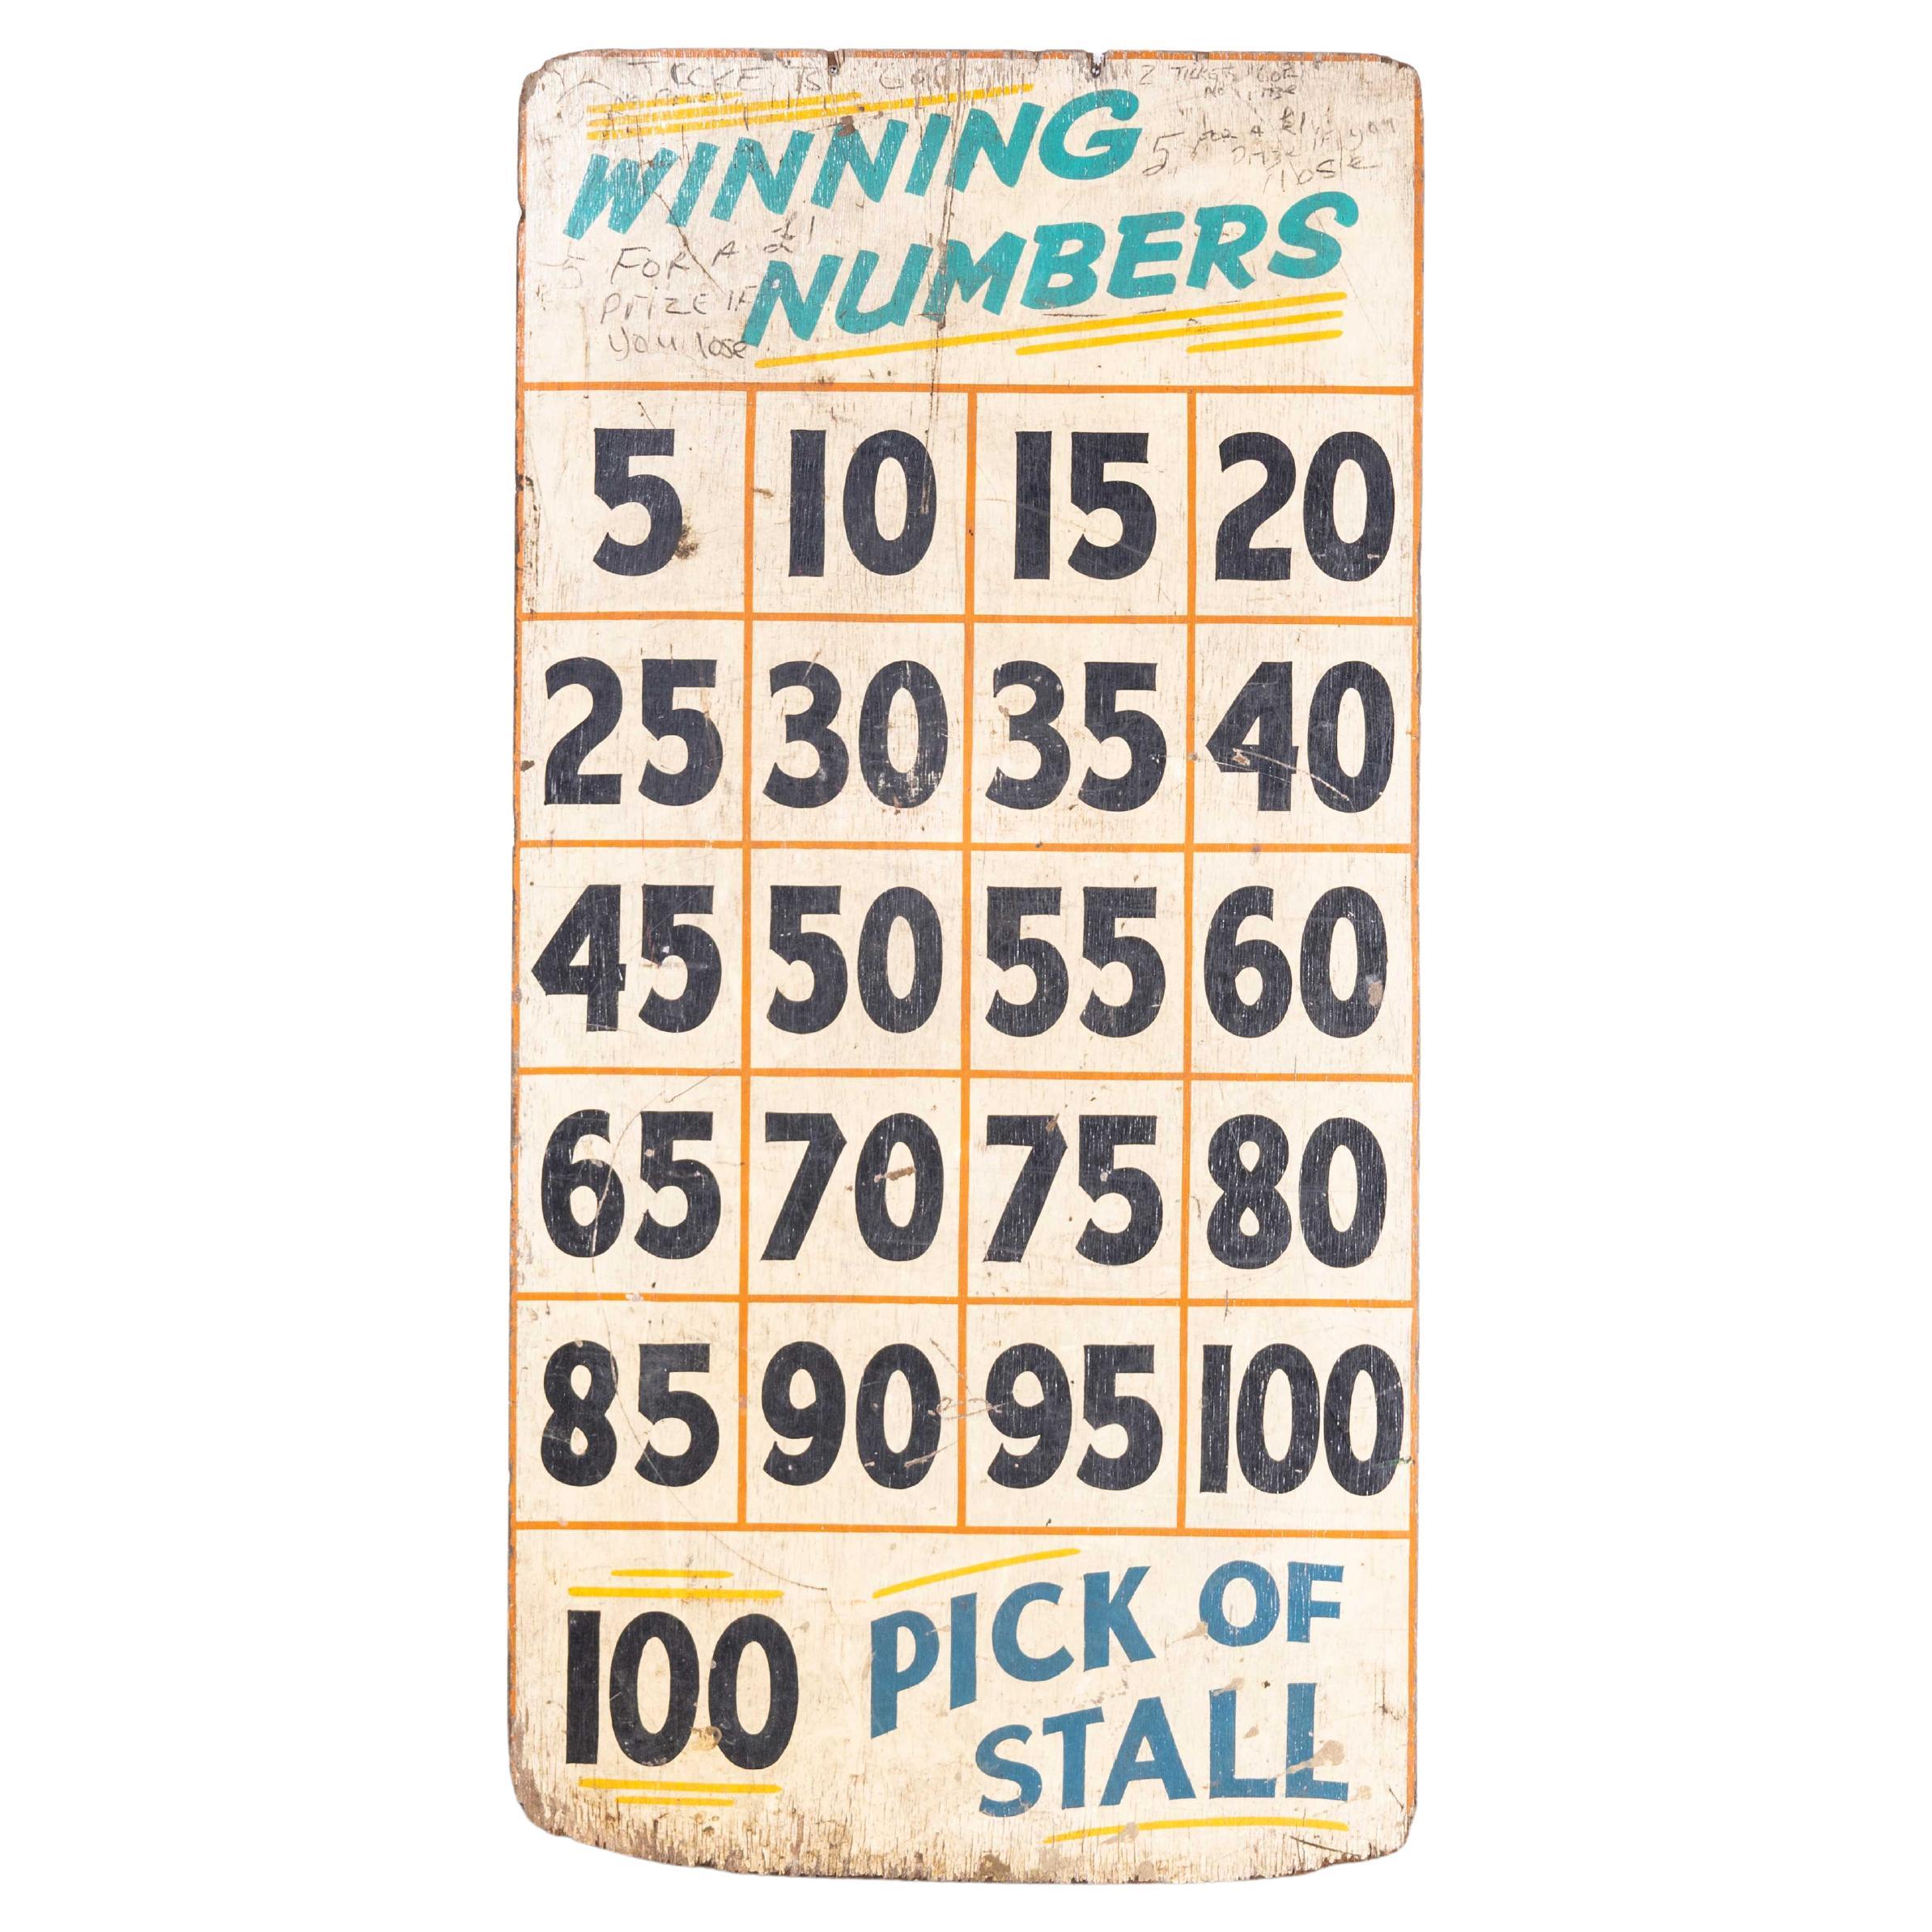 Grand panneau d'affichage original « Winning Numbers » des années 1950 - Odds